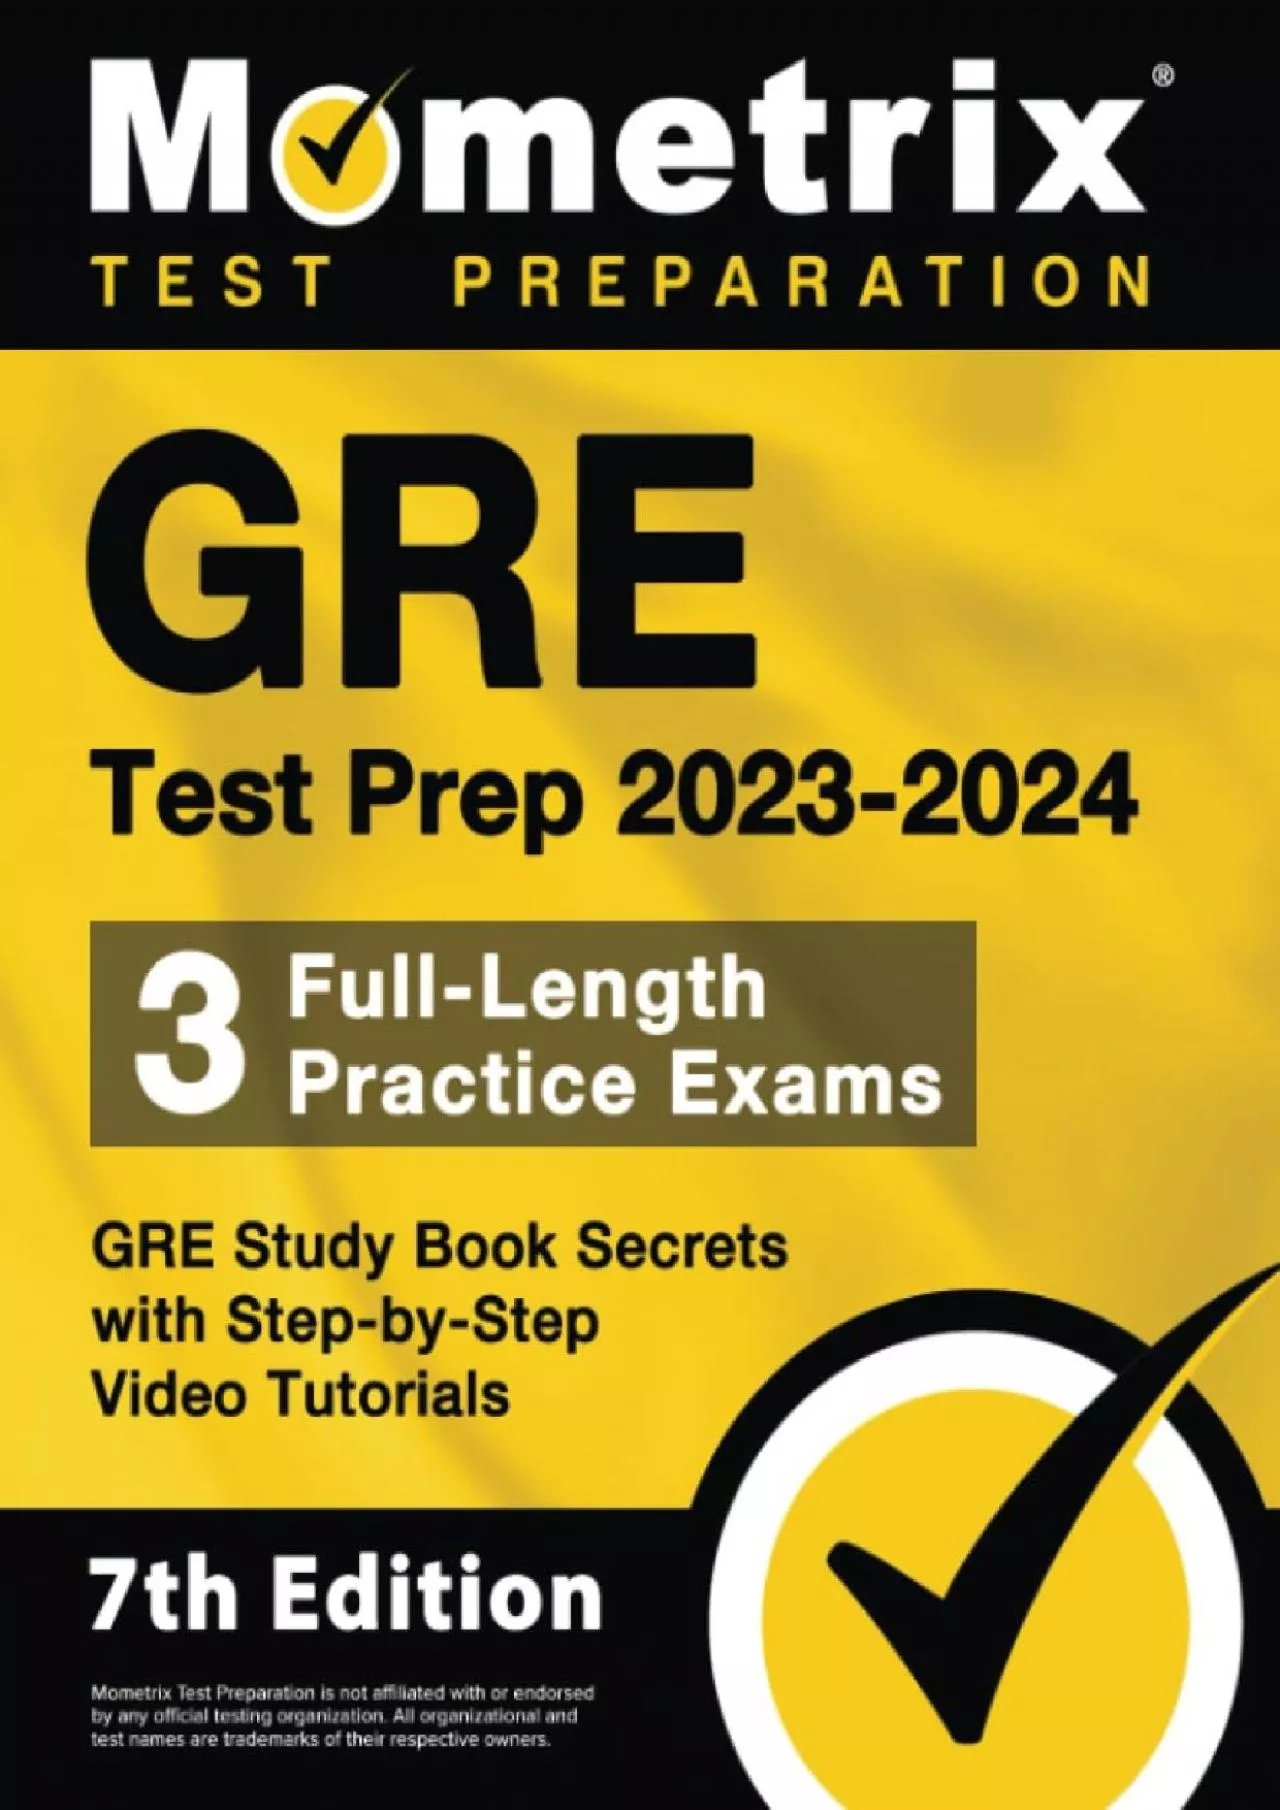 [EBOOK] GRE Test Prep 2023-2024 - 3 Full-Length Practice Exams, GRE Study Book Secrets